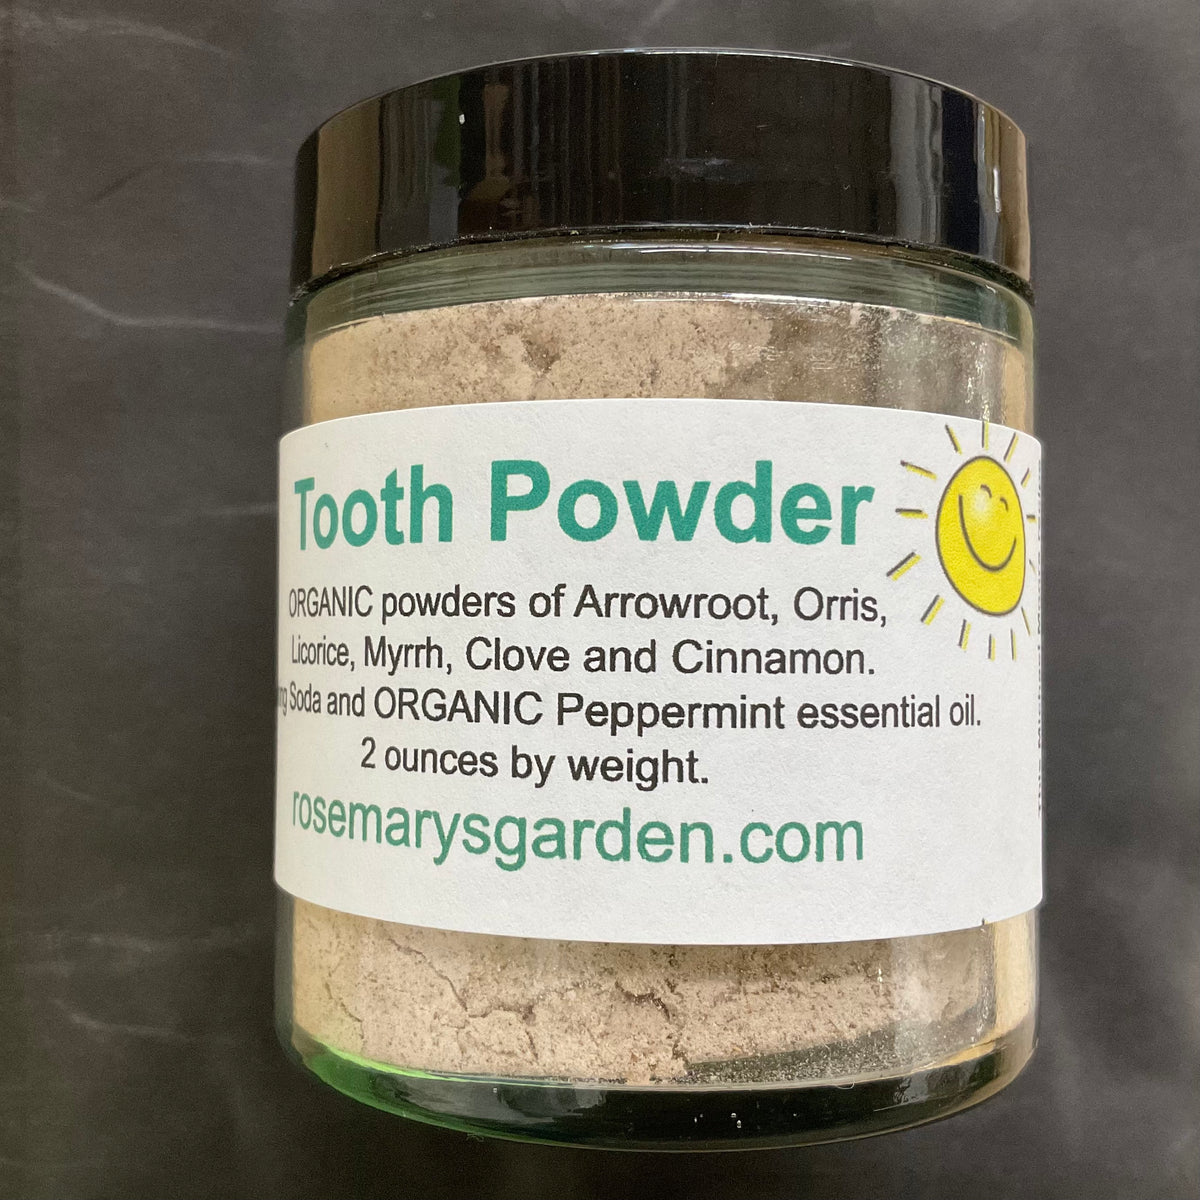 Tooth Powder 2oz – Rosemary's Garden